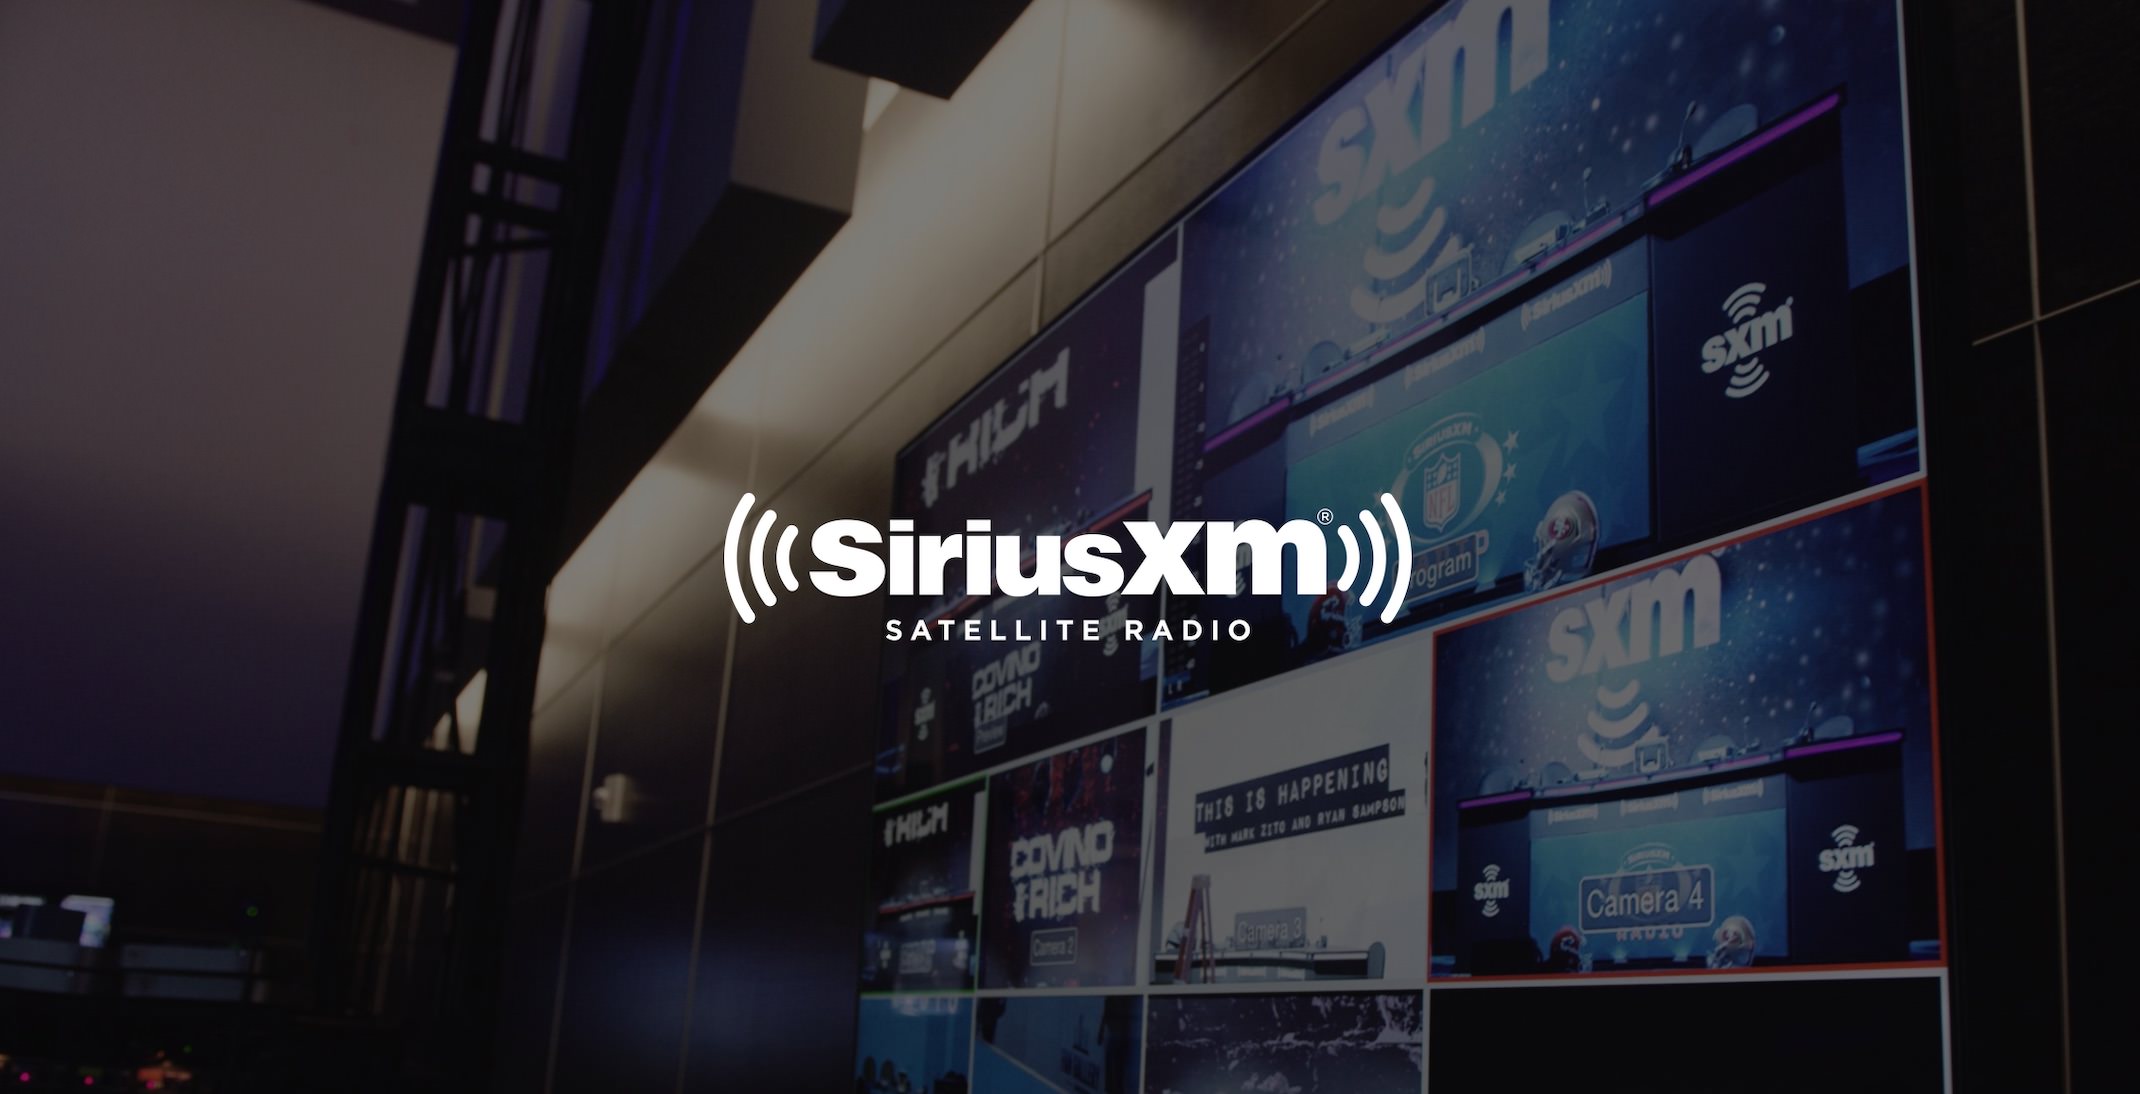 IU C&I Studios Page White Sirius XM Satellite Radio logo with dimmed background of video bank